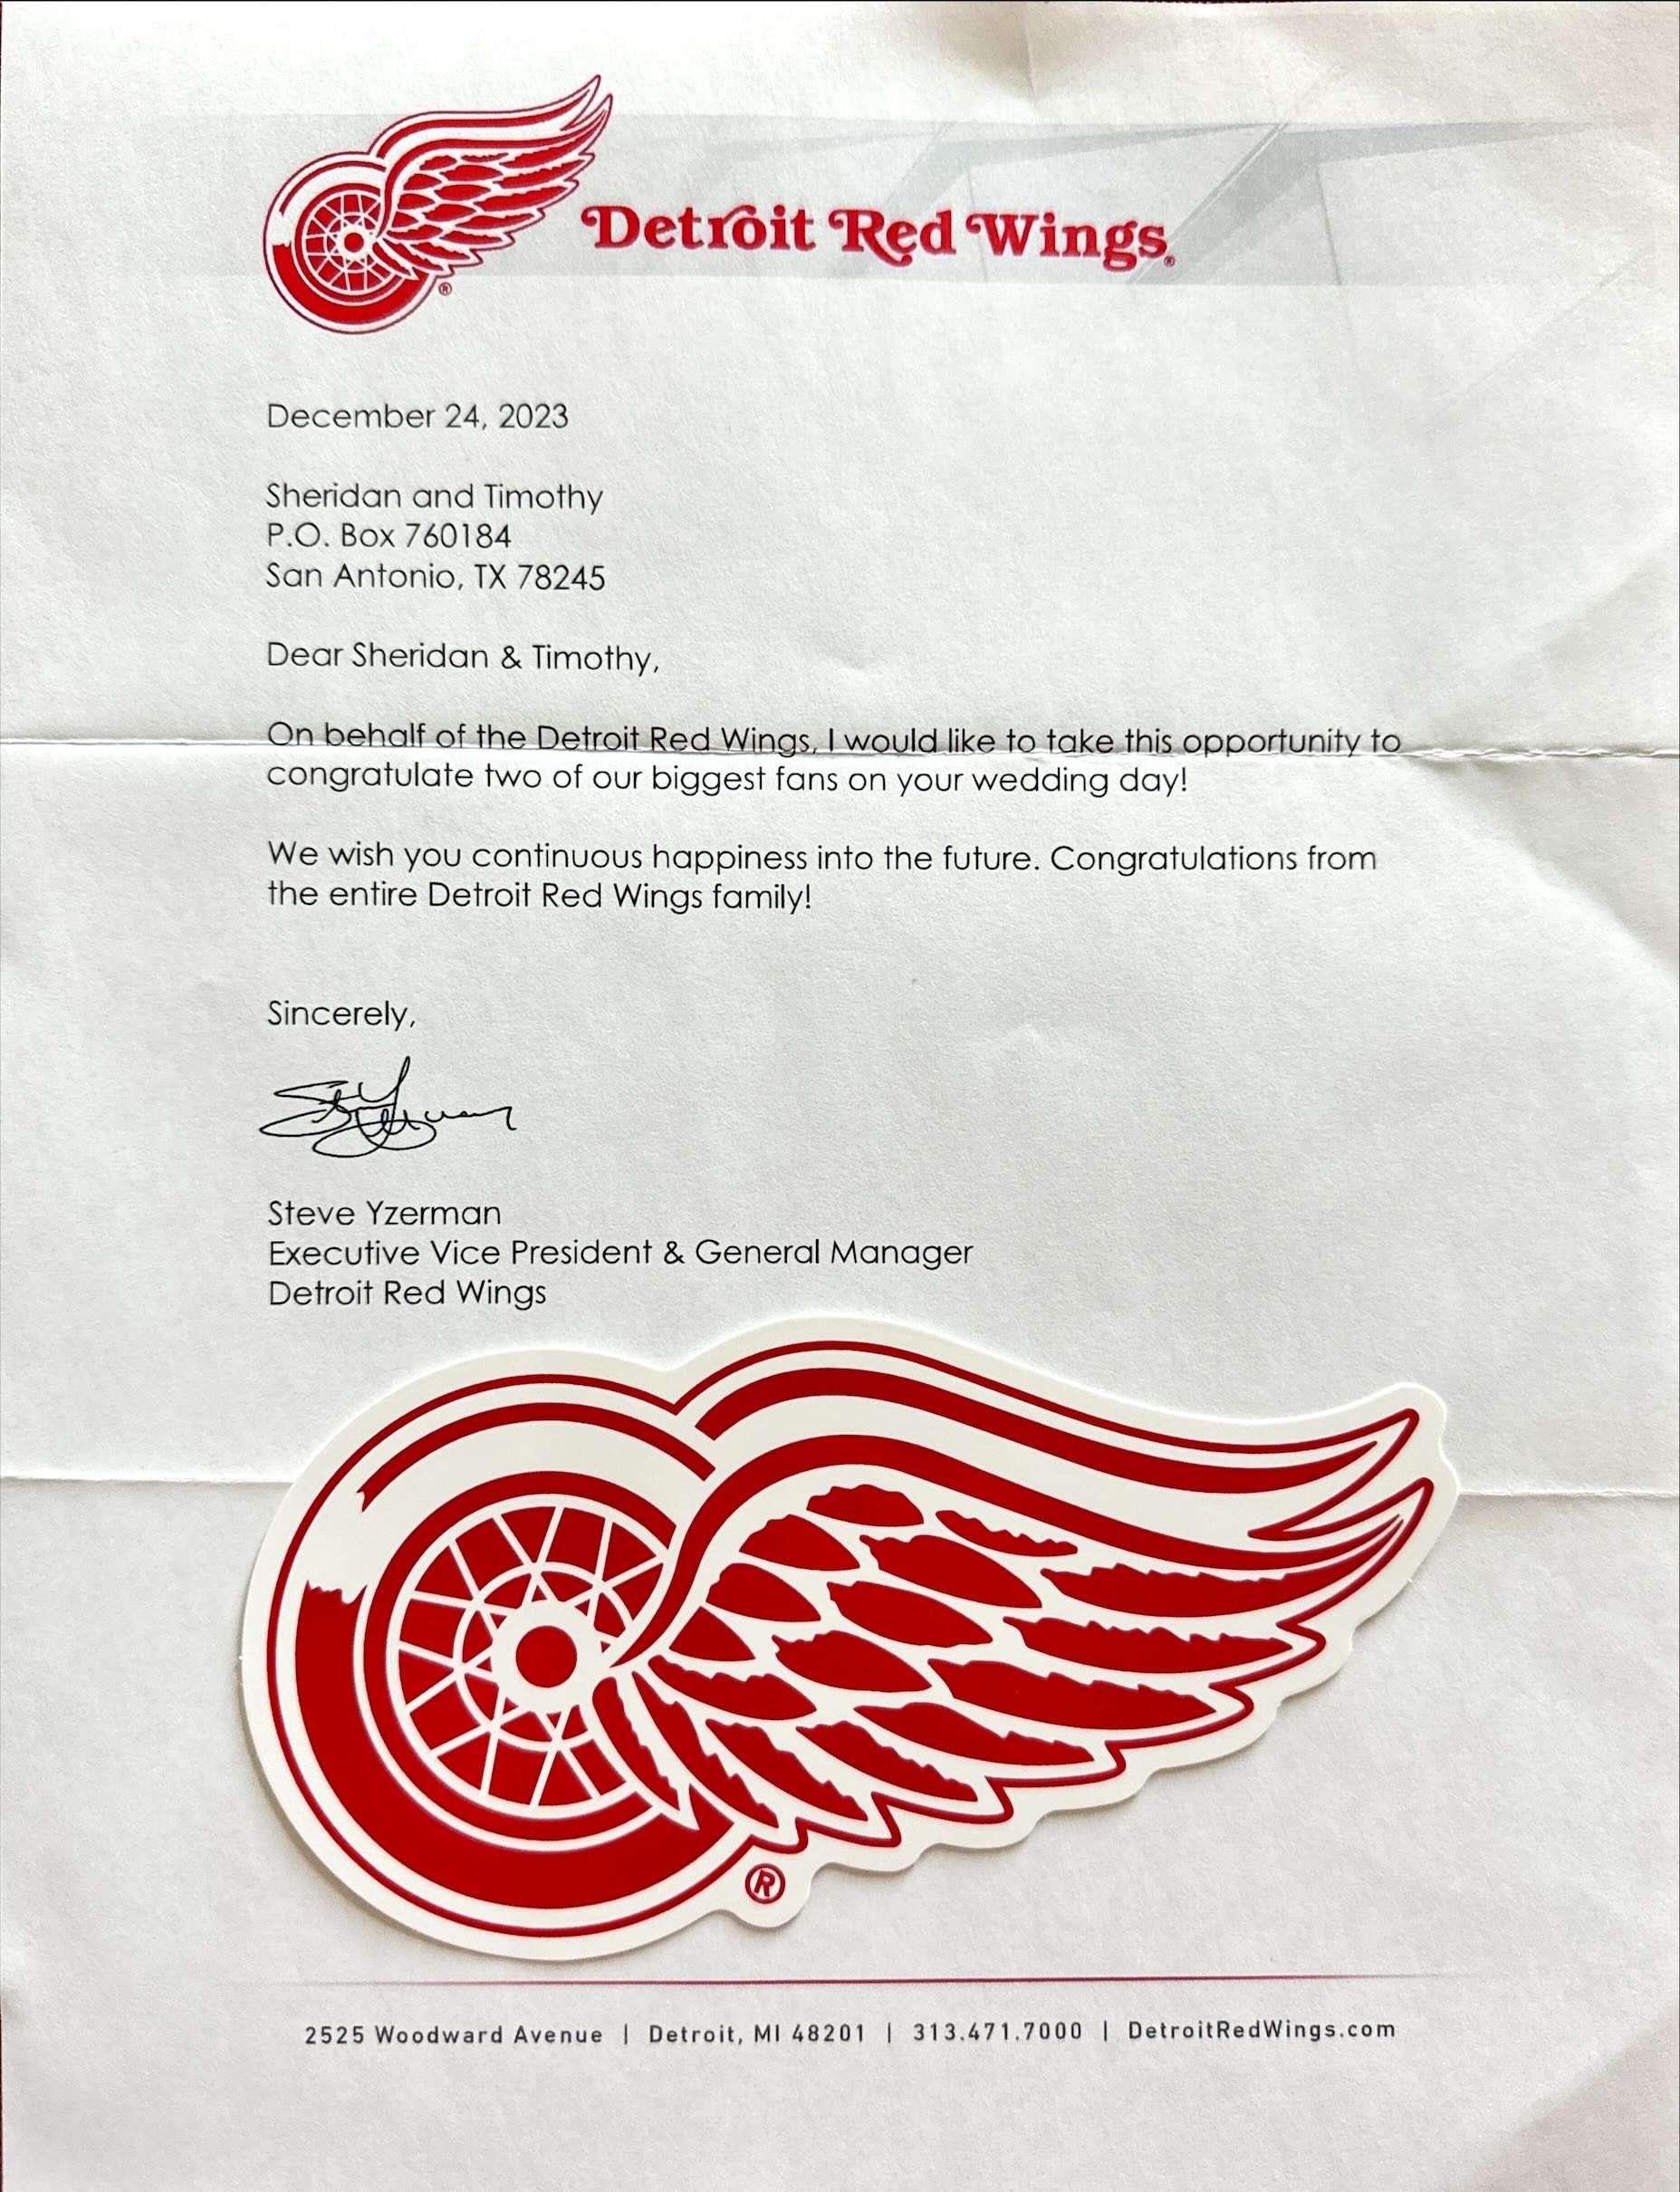 Detroit Red Wings Letter